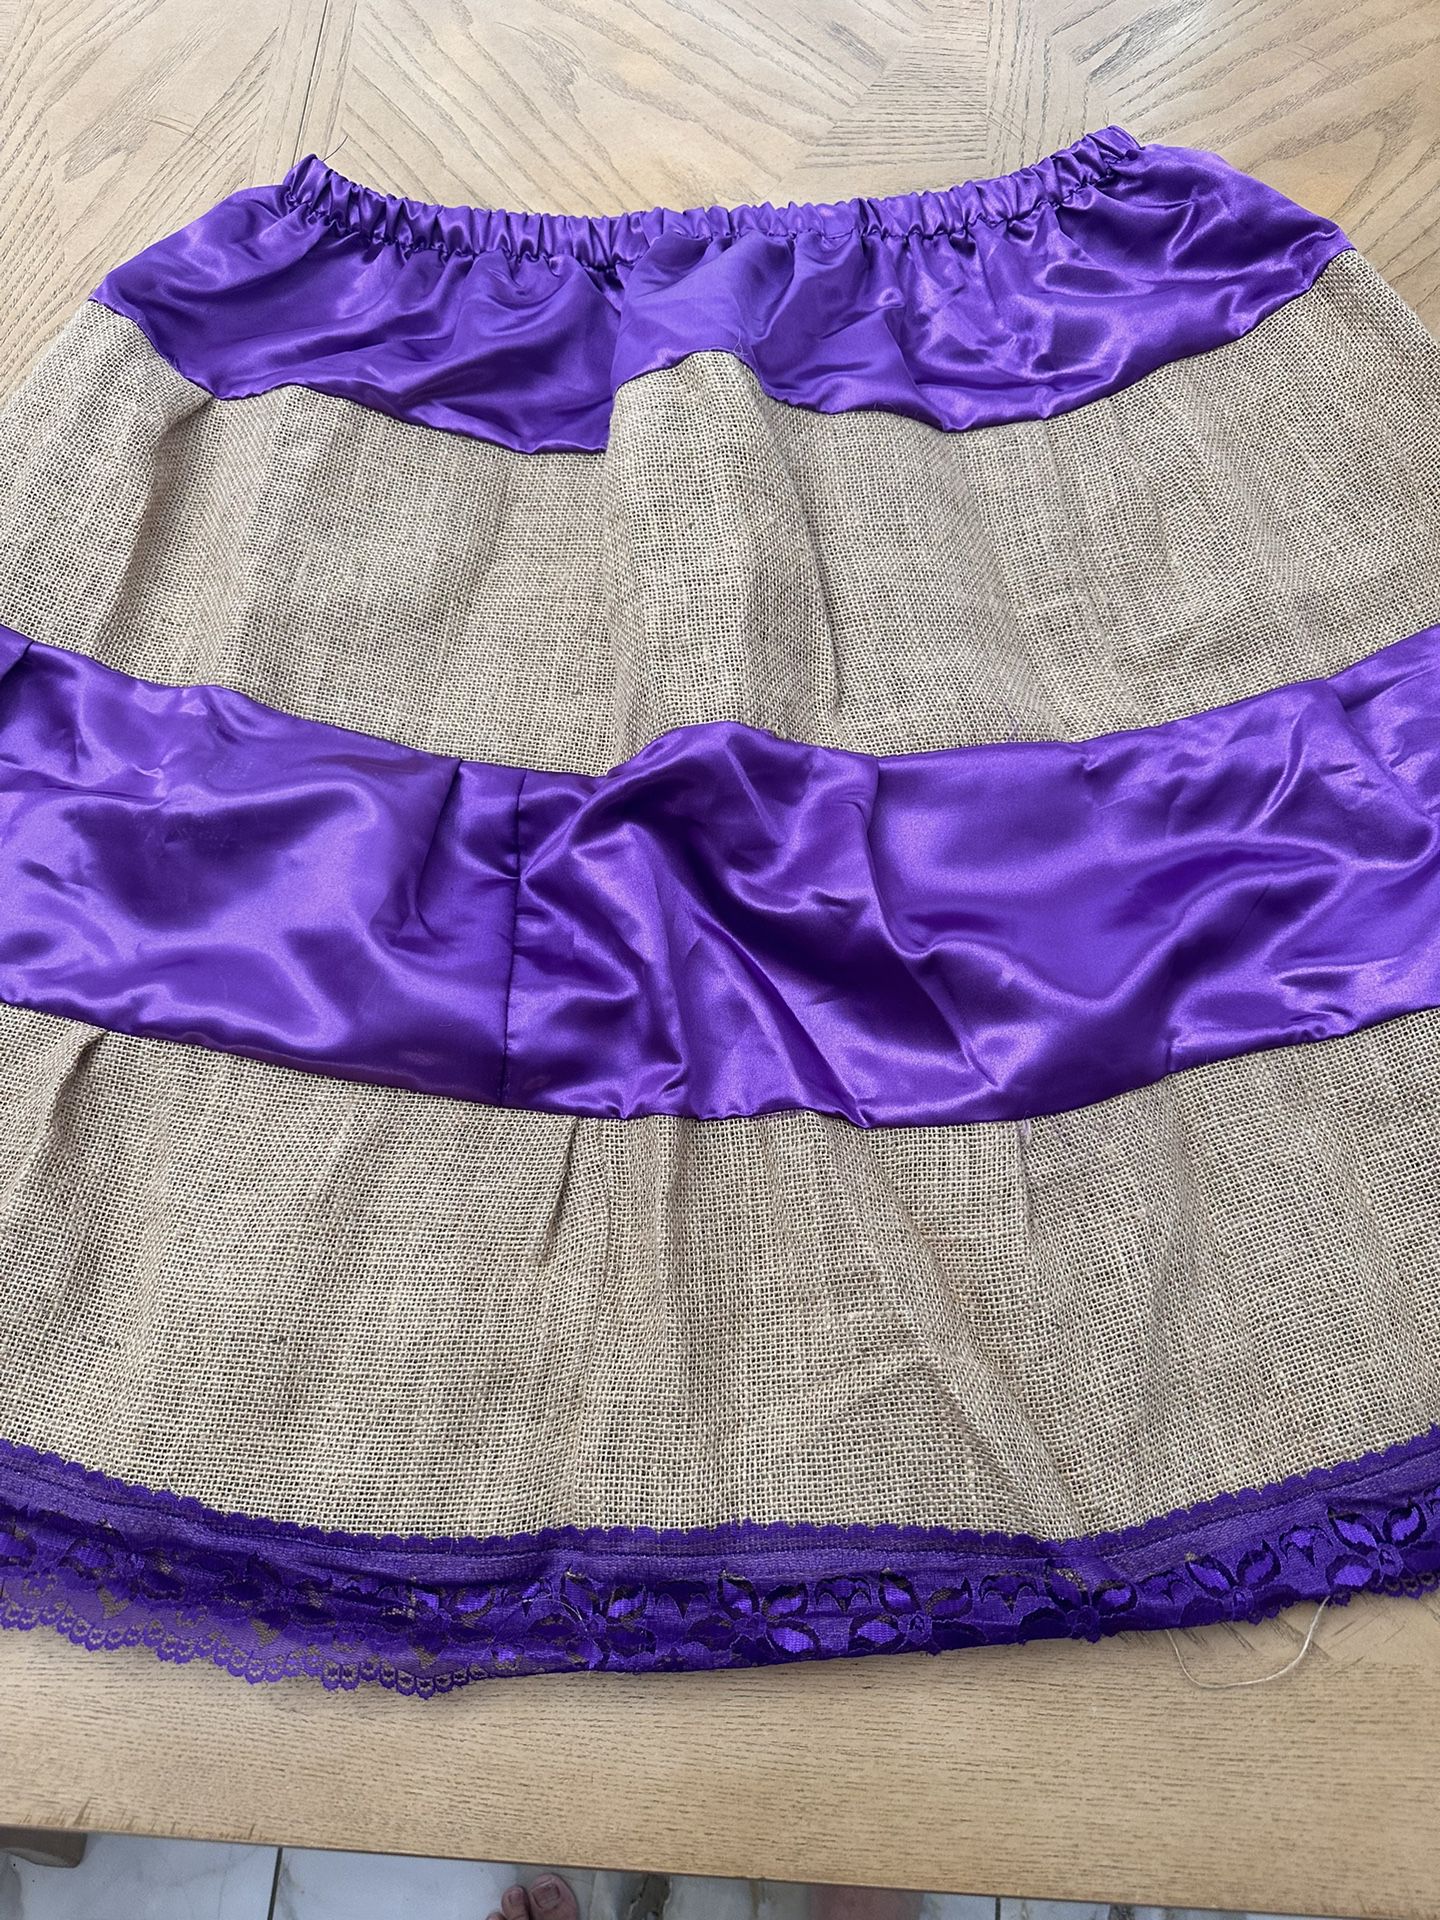 Woman’s skirt purple color satin and burlap Waist 18” Length 28”